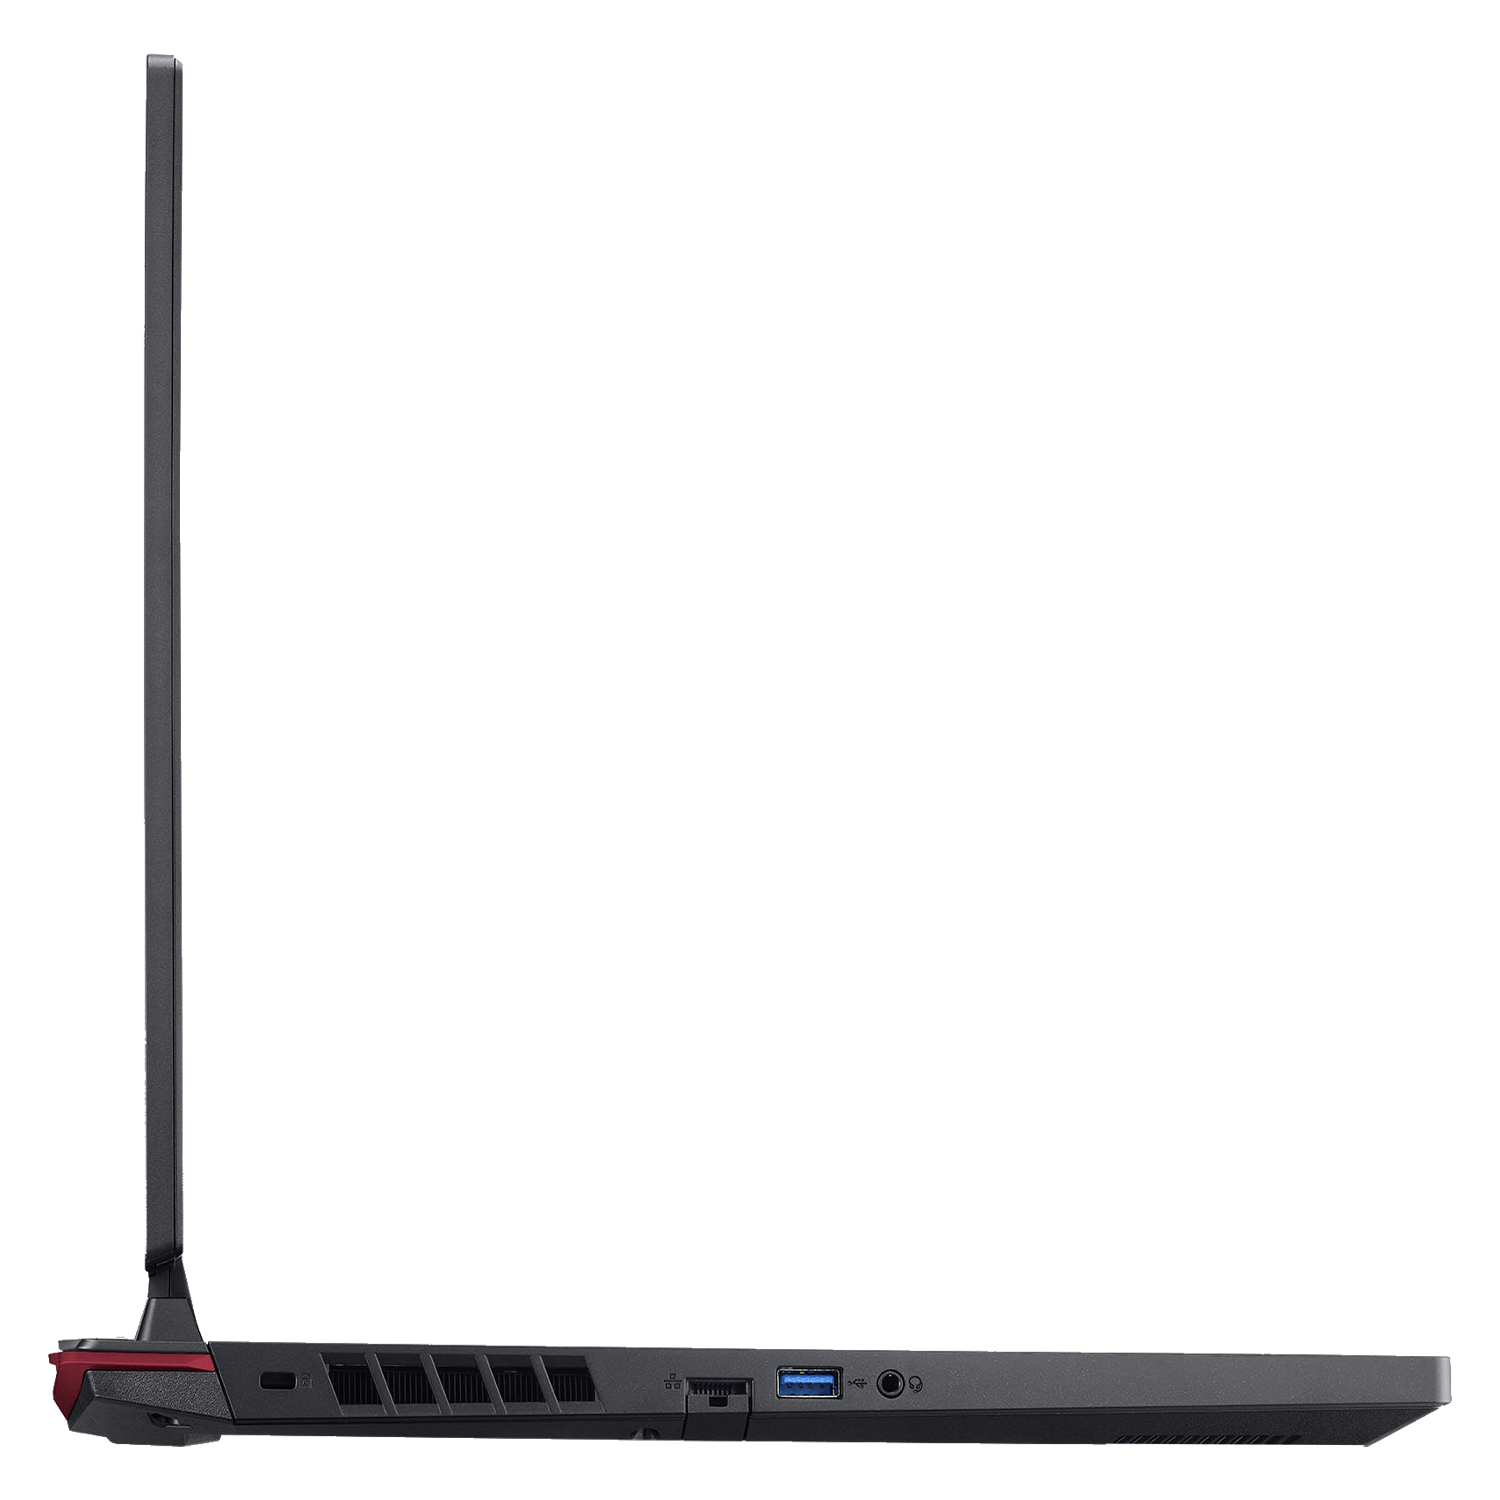 Notebook Gamer Acer Nitro 5 AN517-55-57WA Intel Core i5 12500H / 8GB RAM / 256SSD / Tela Full HD 17.3" IPS 144Hz / RTX3050 - Preto